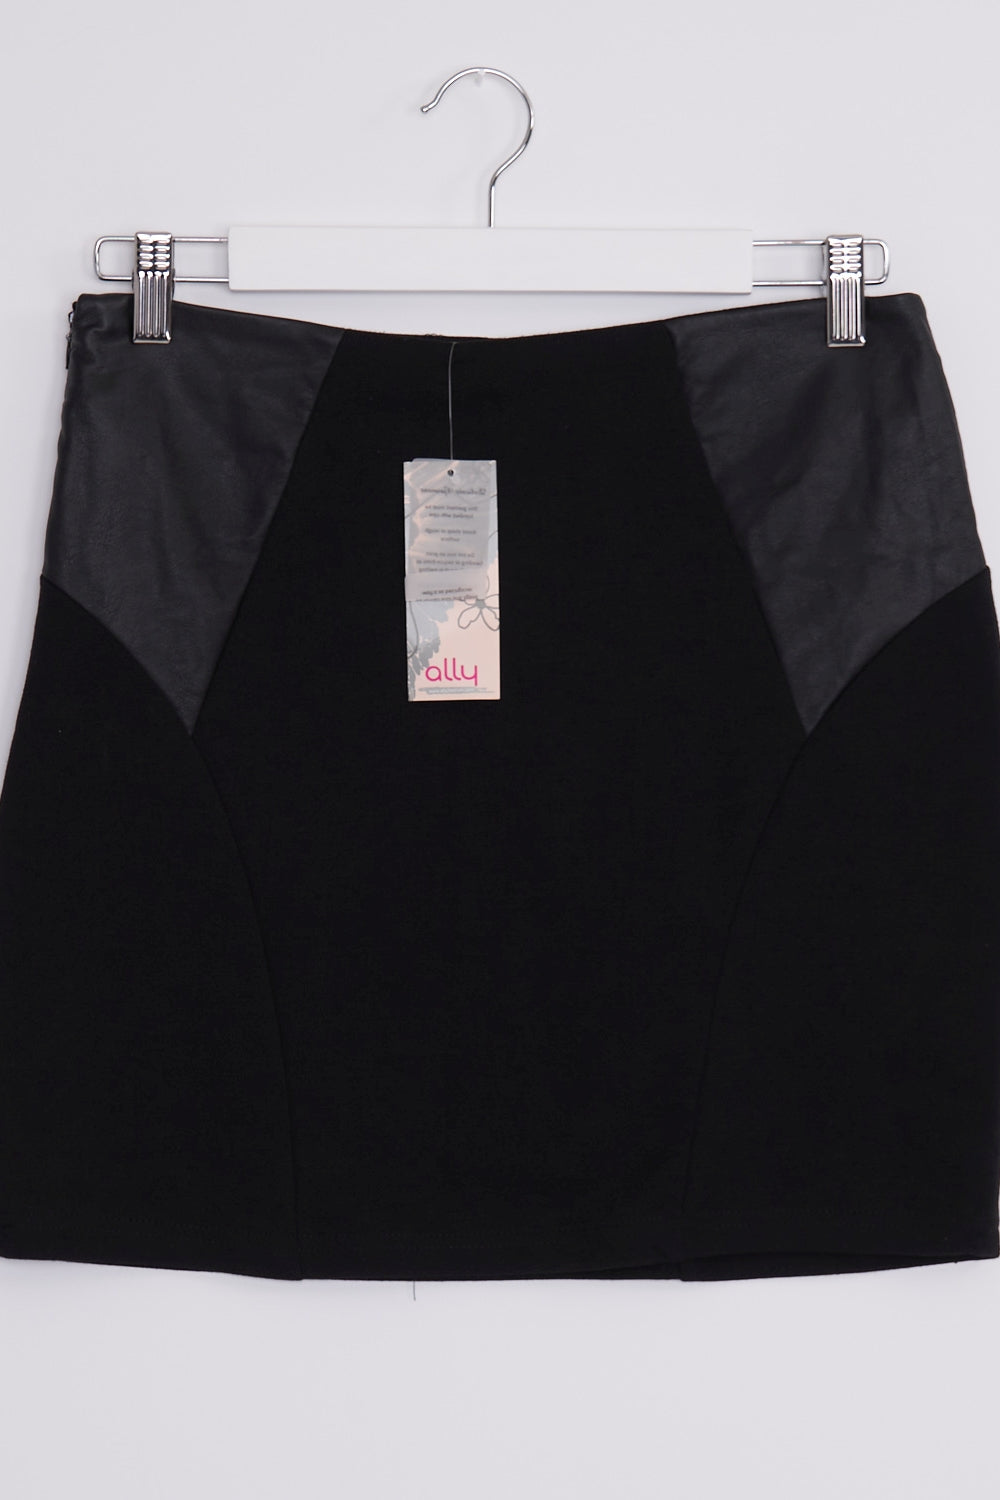 Ally Fashion Black Faux Leather Detail Mini Skirt 12